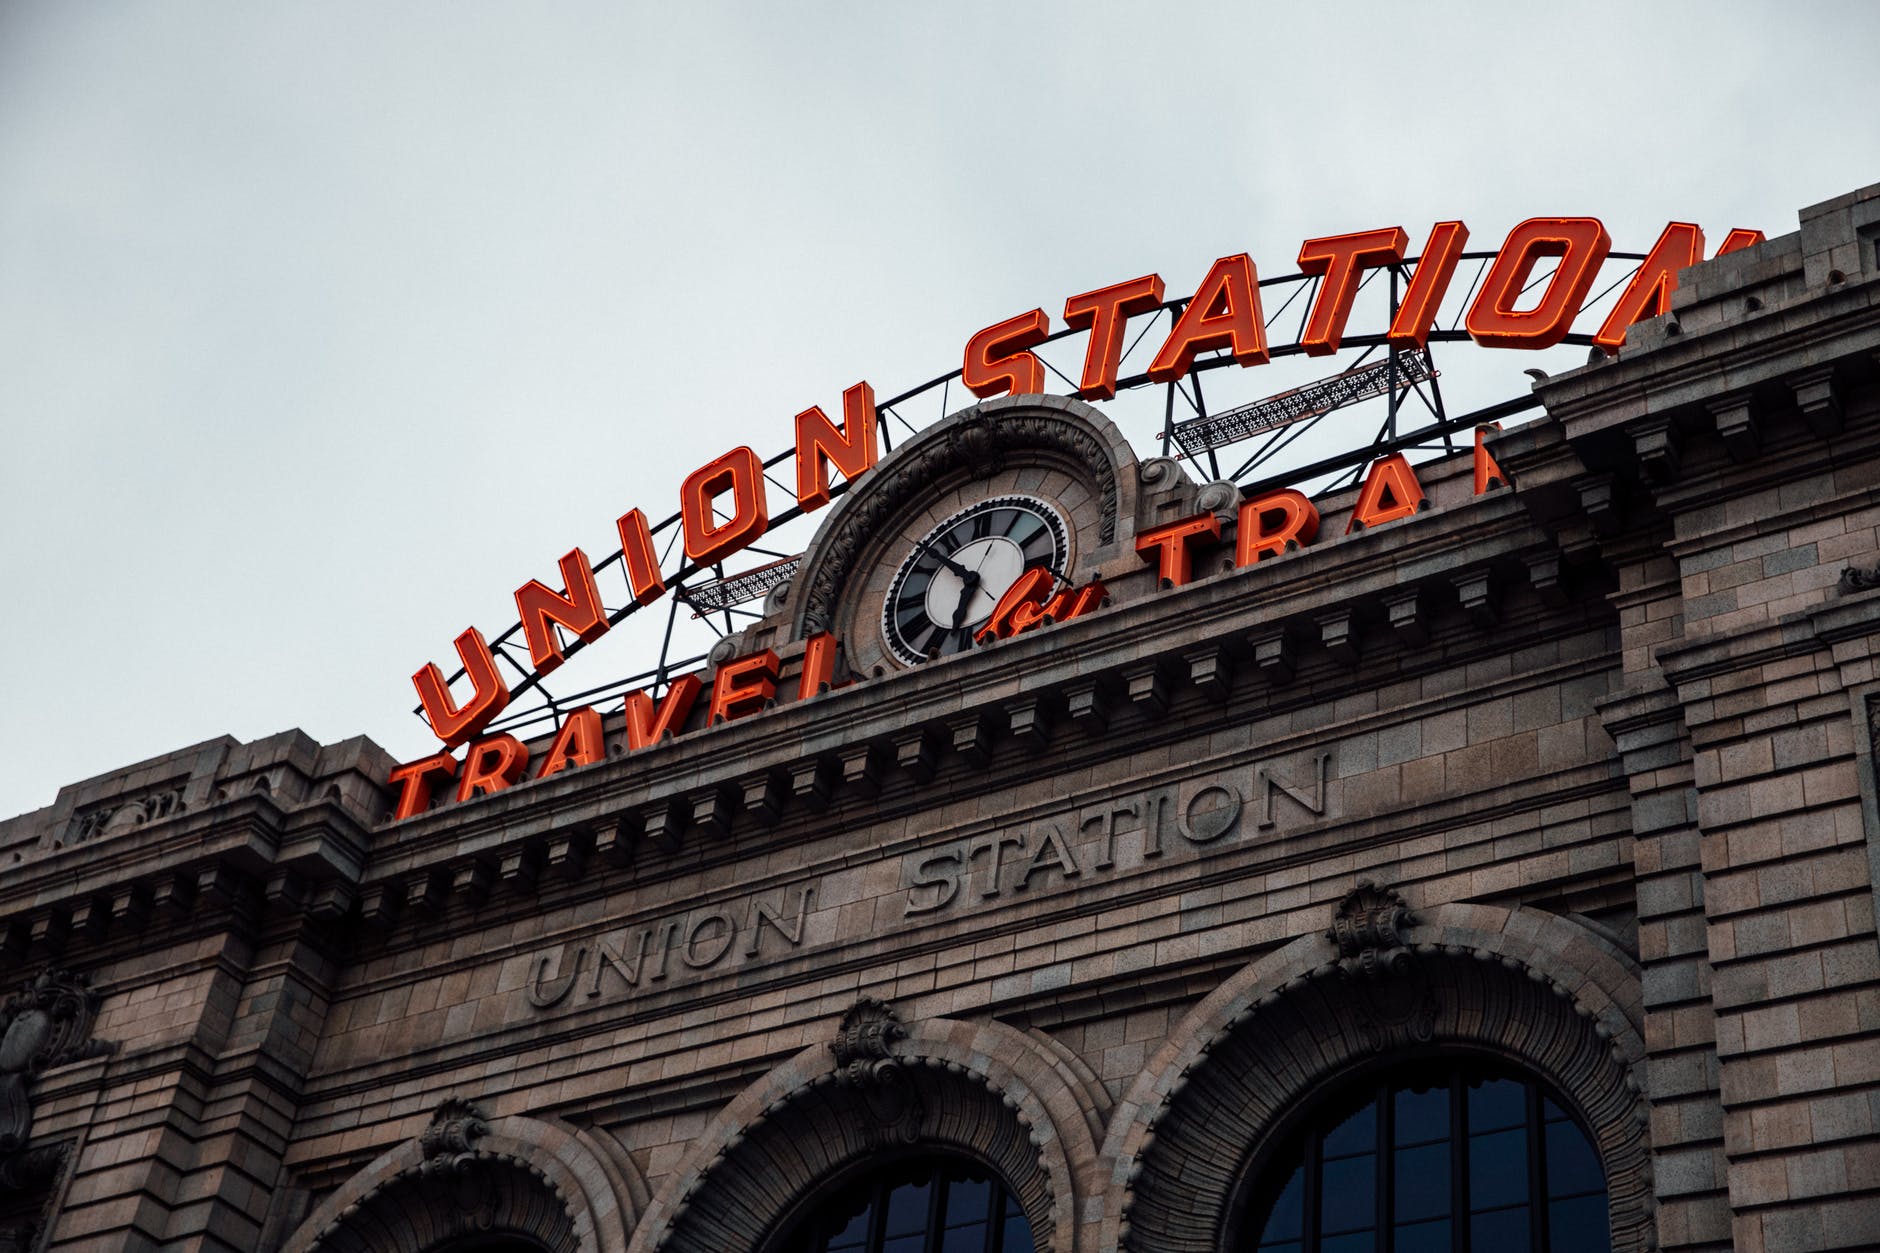 union station building